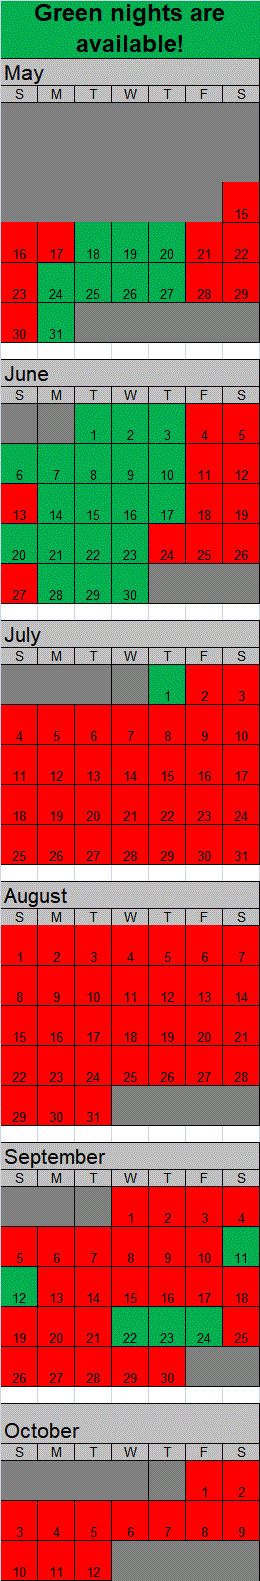 Lakeview Campsite 2 Calendar